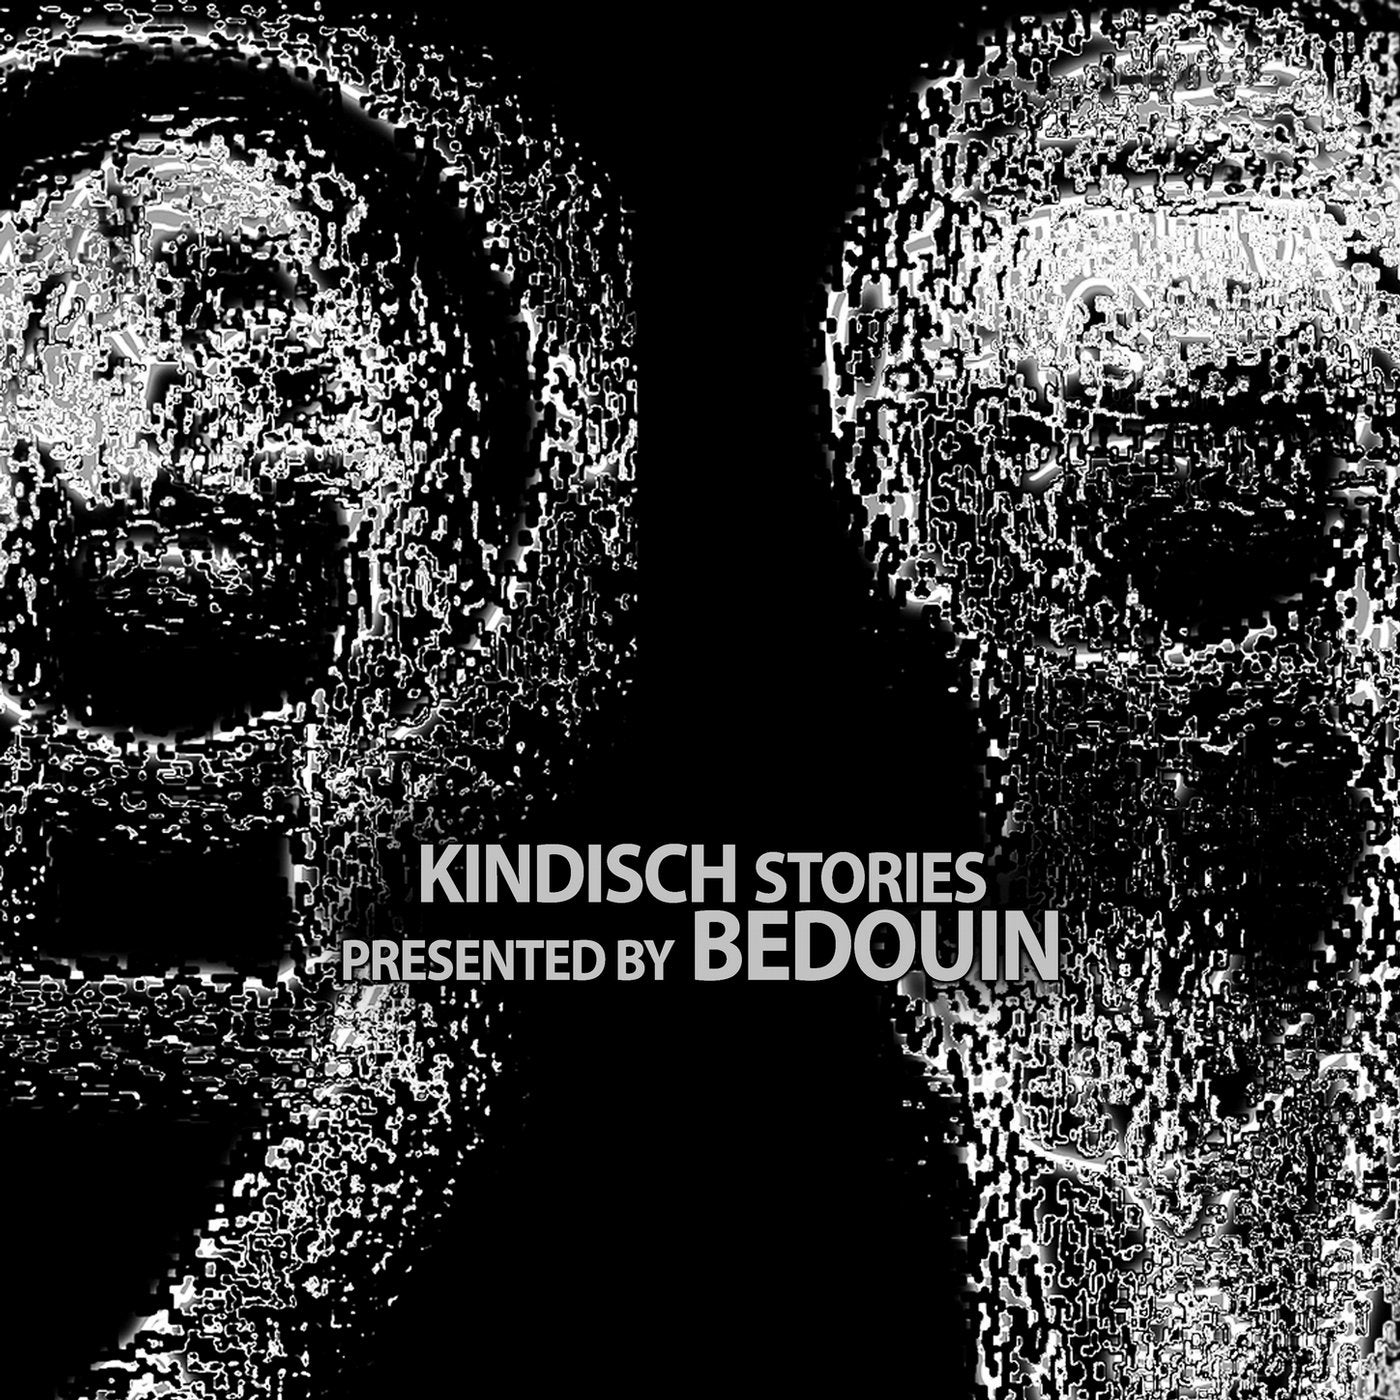 Kindisch Stories Presented by Bedouin